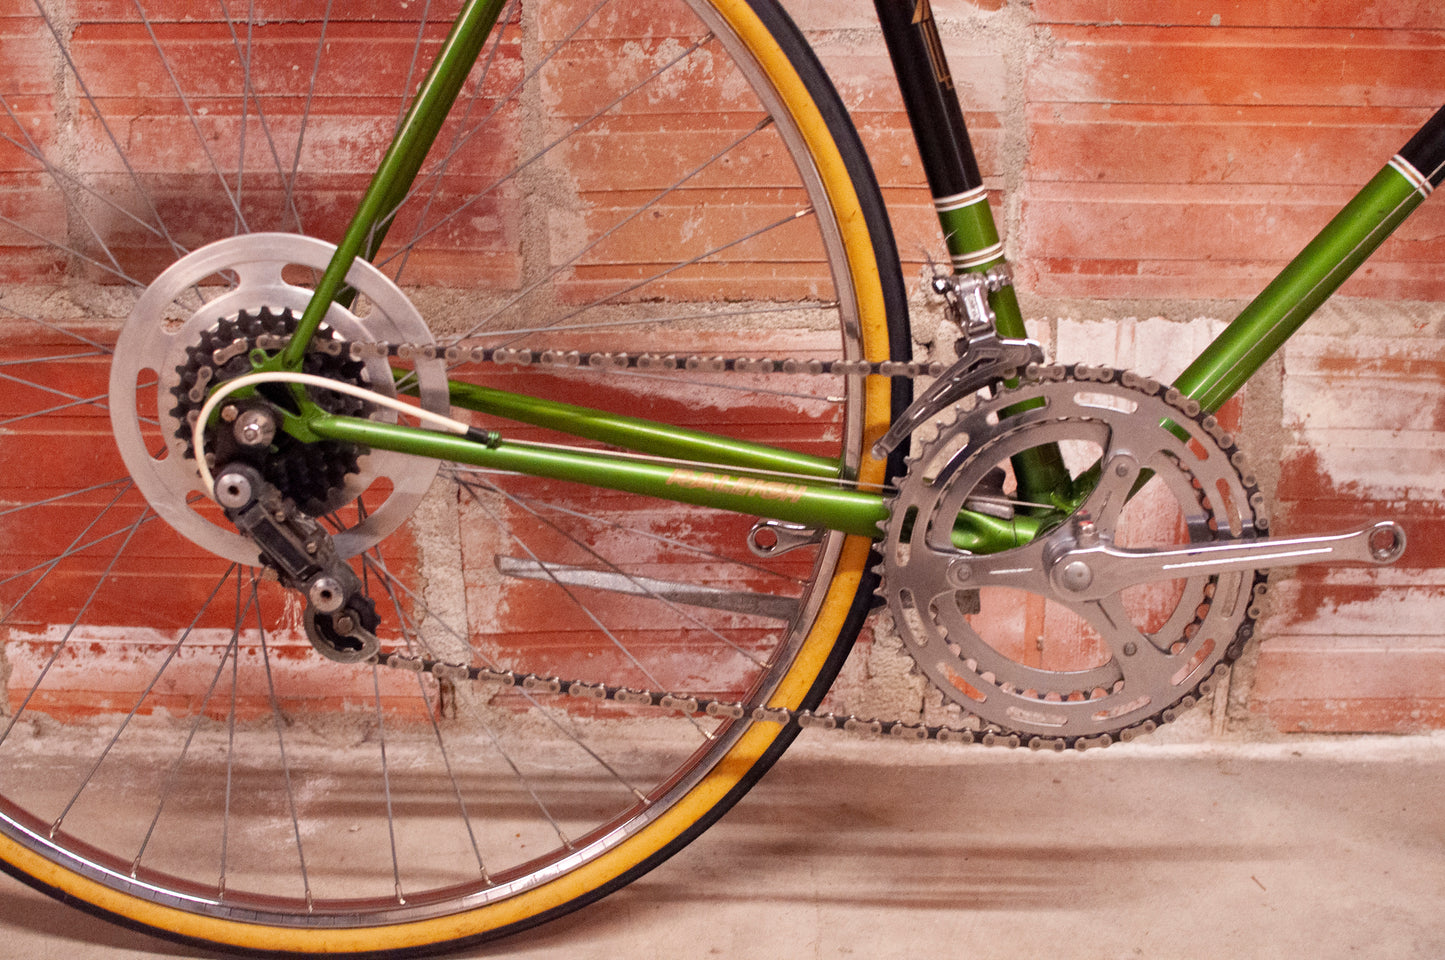 Raleigh Grand Prix Vintage Road Bike, 59 cm/XL, Green, gold and black